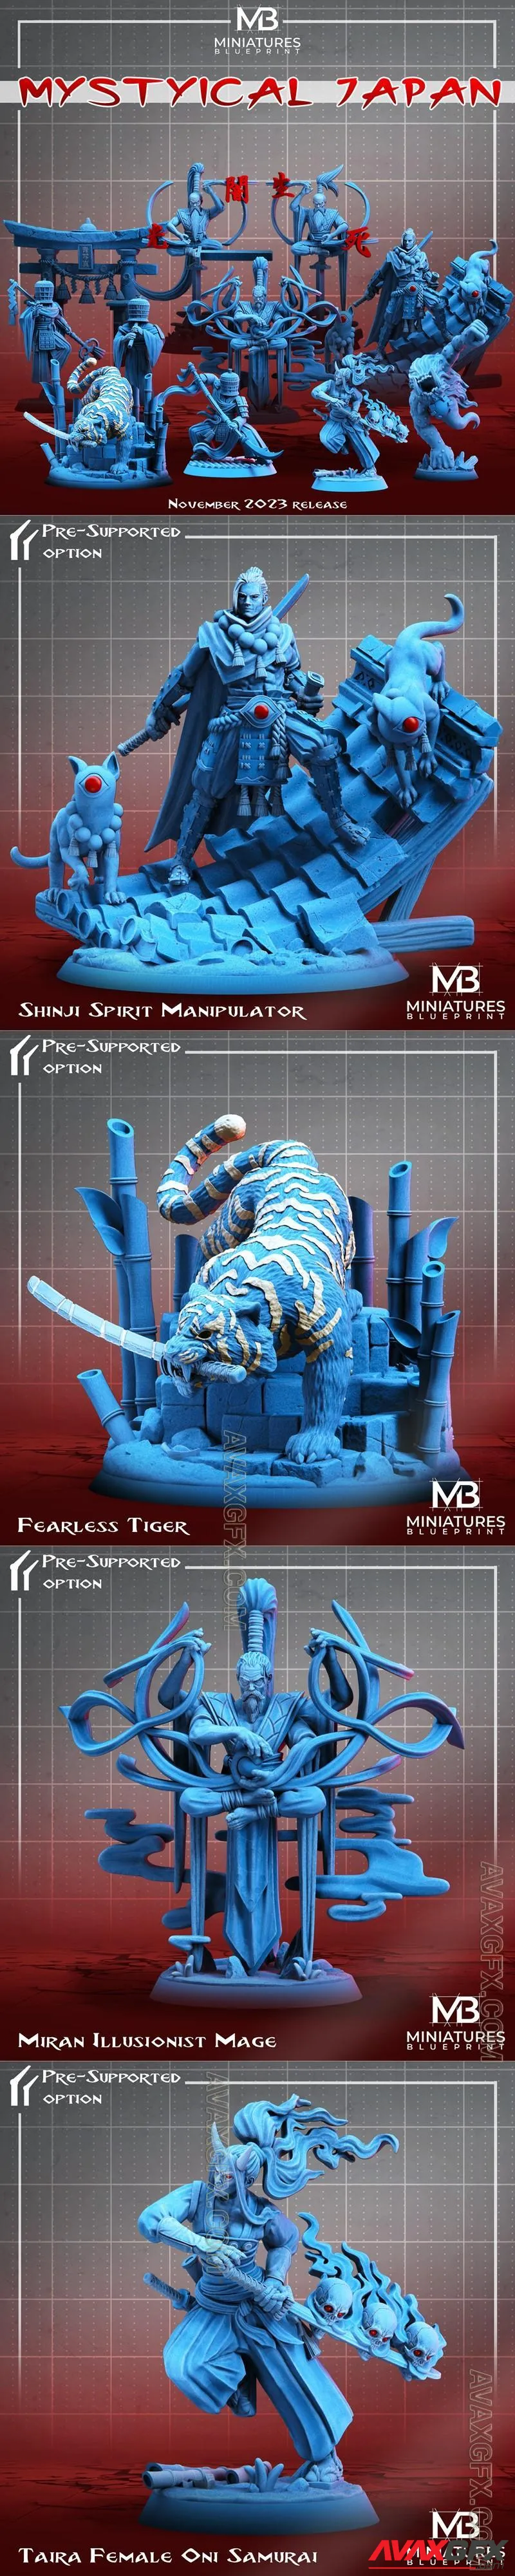 Miniatures Blueprint - Mystical Japan - STL 3D Model